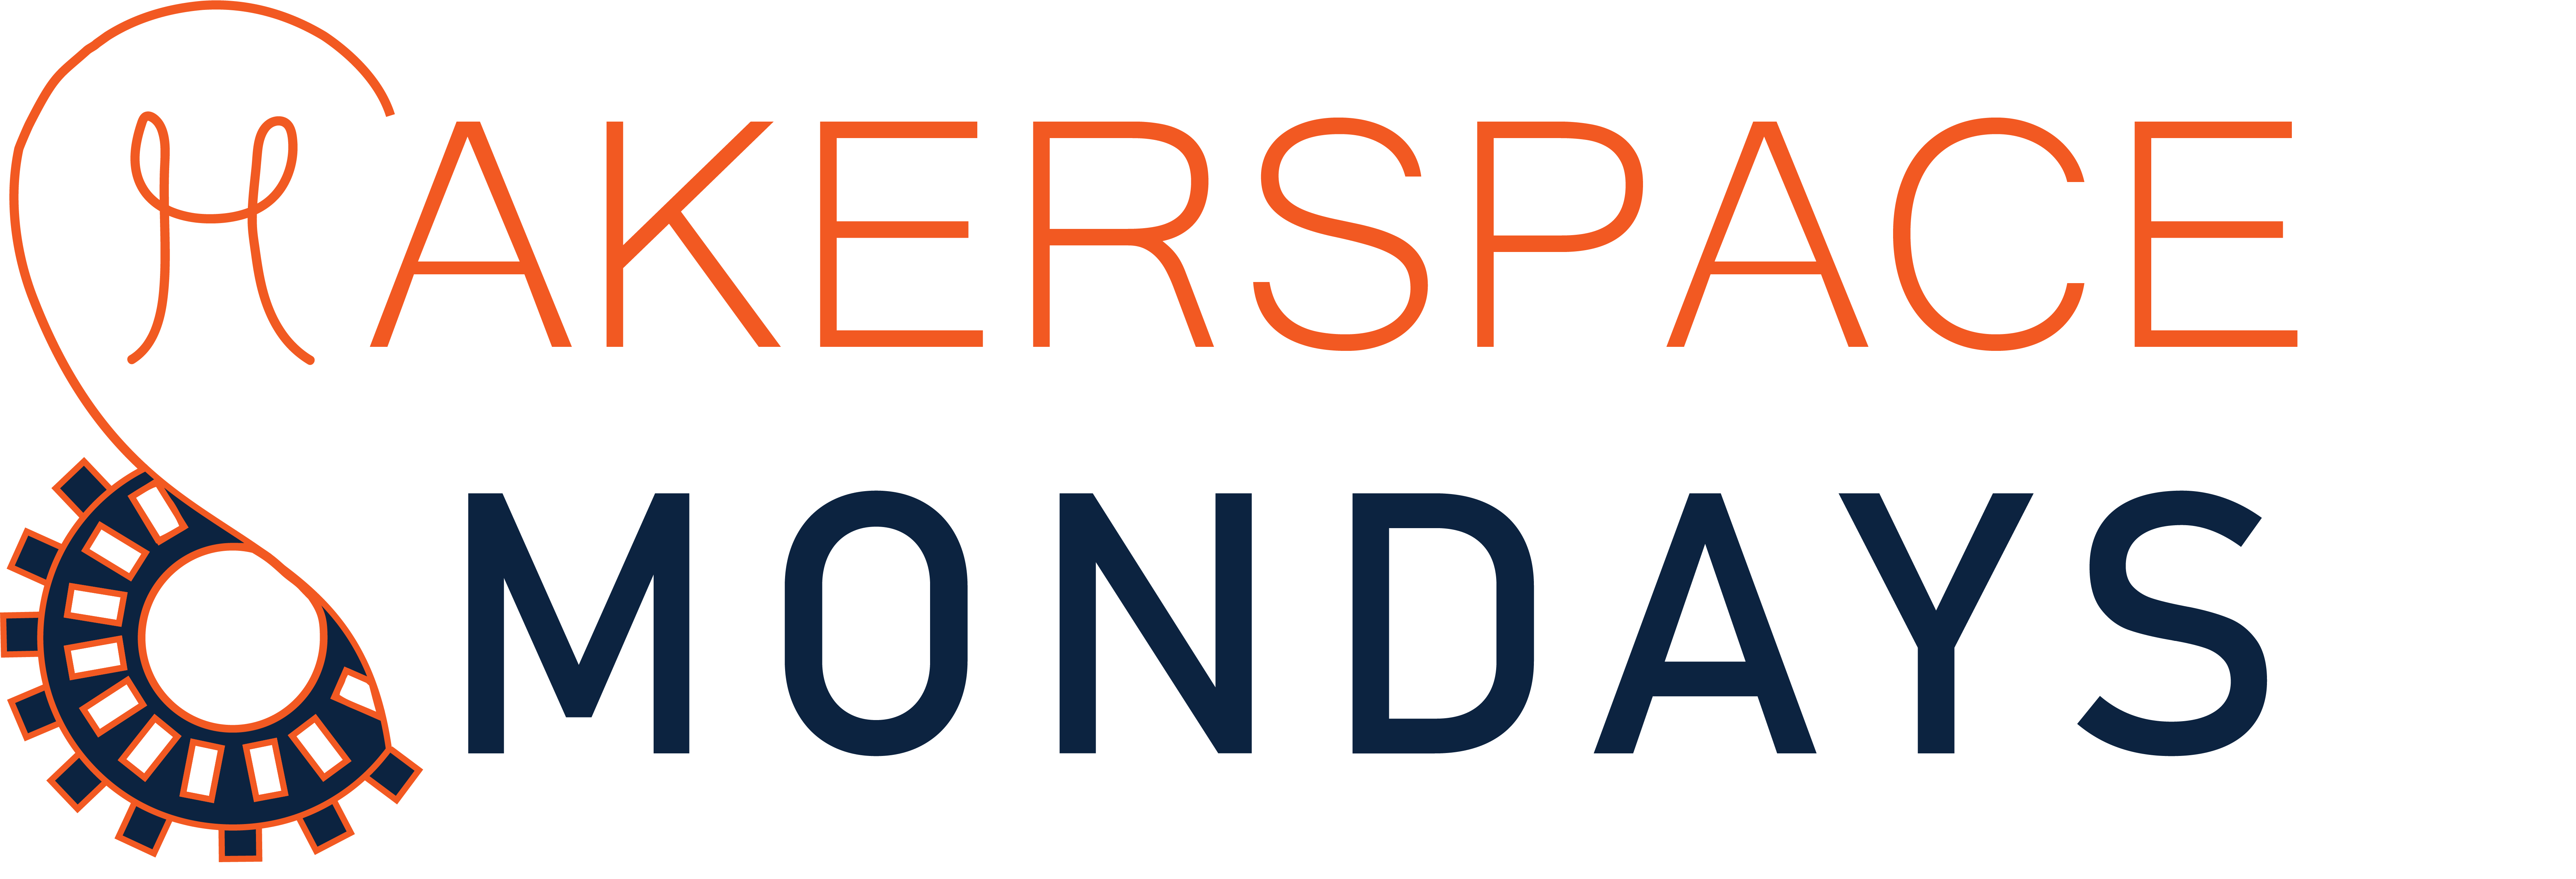 Makerspace Mondays logo